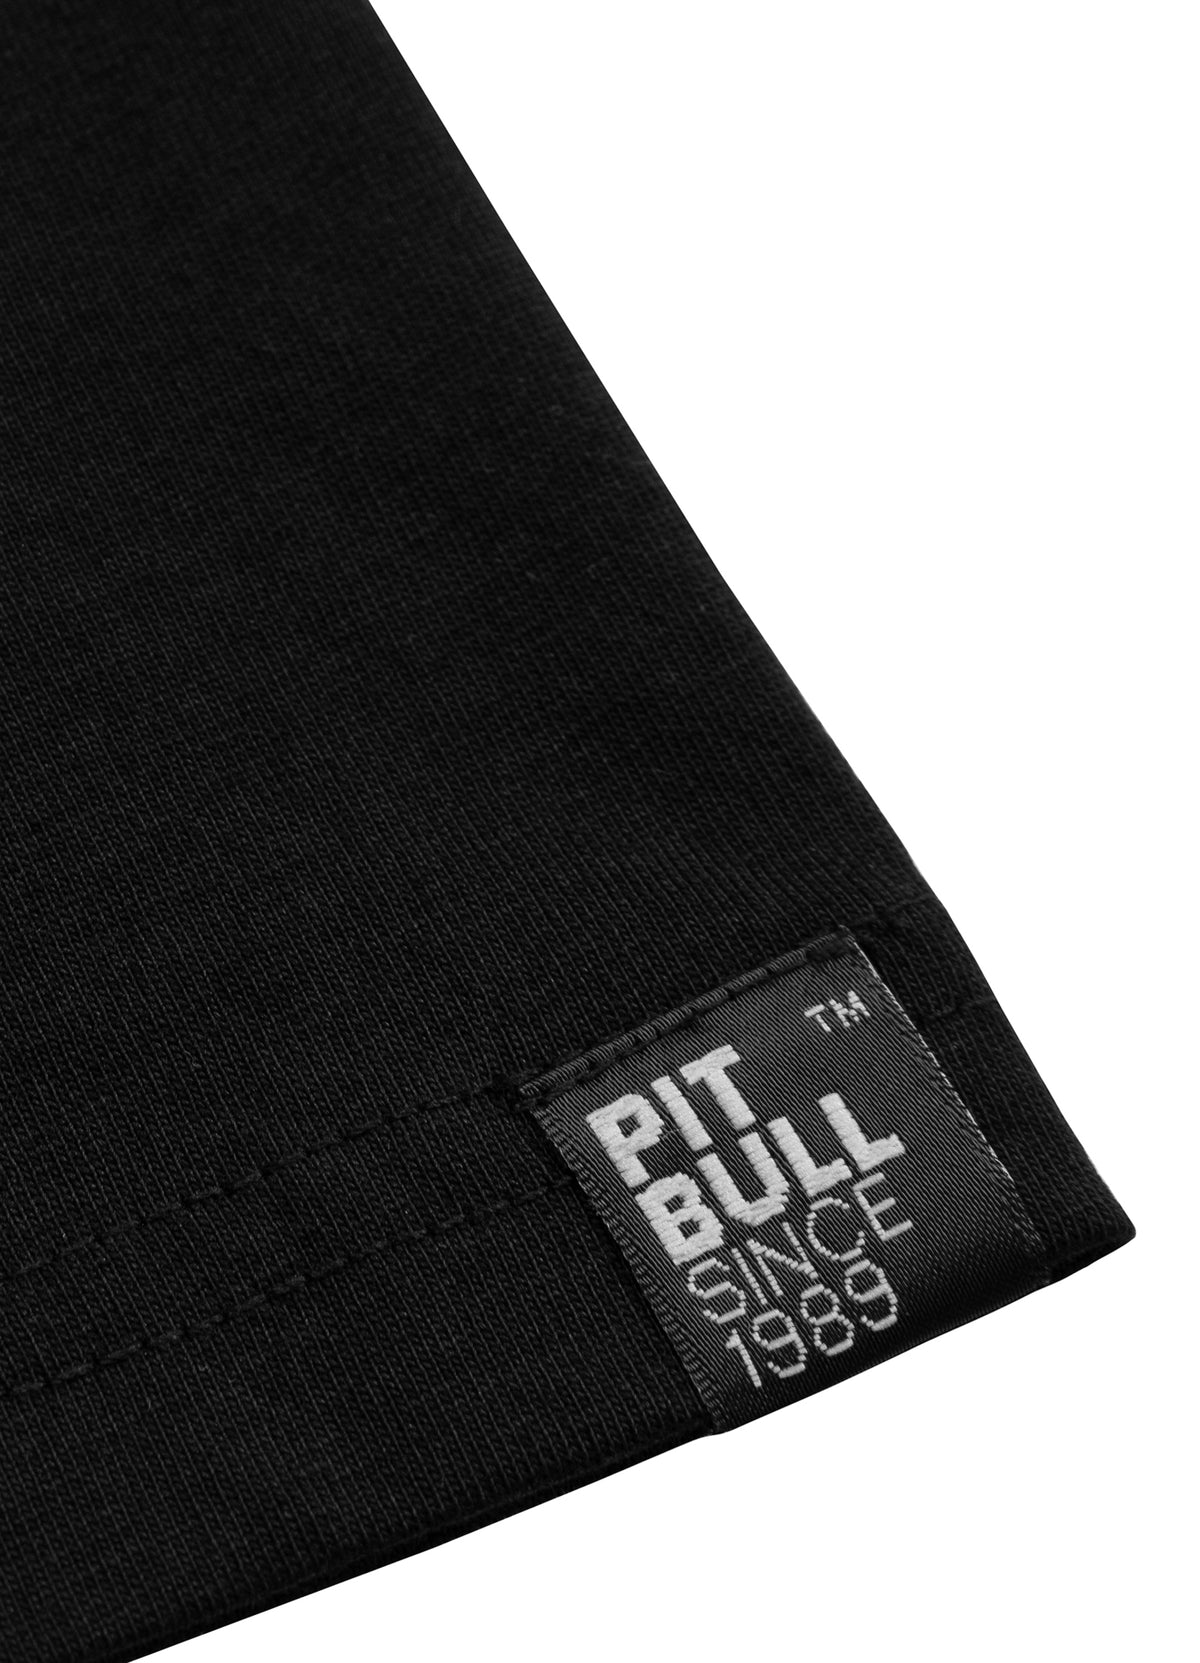 KEEP ROLLING Black T-shirt - Pitbullstore.eu